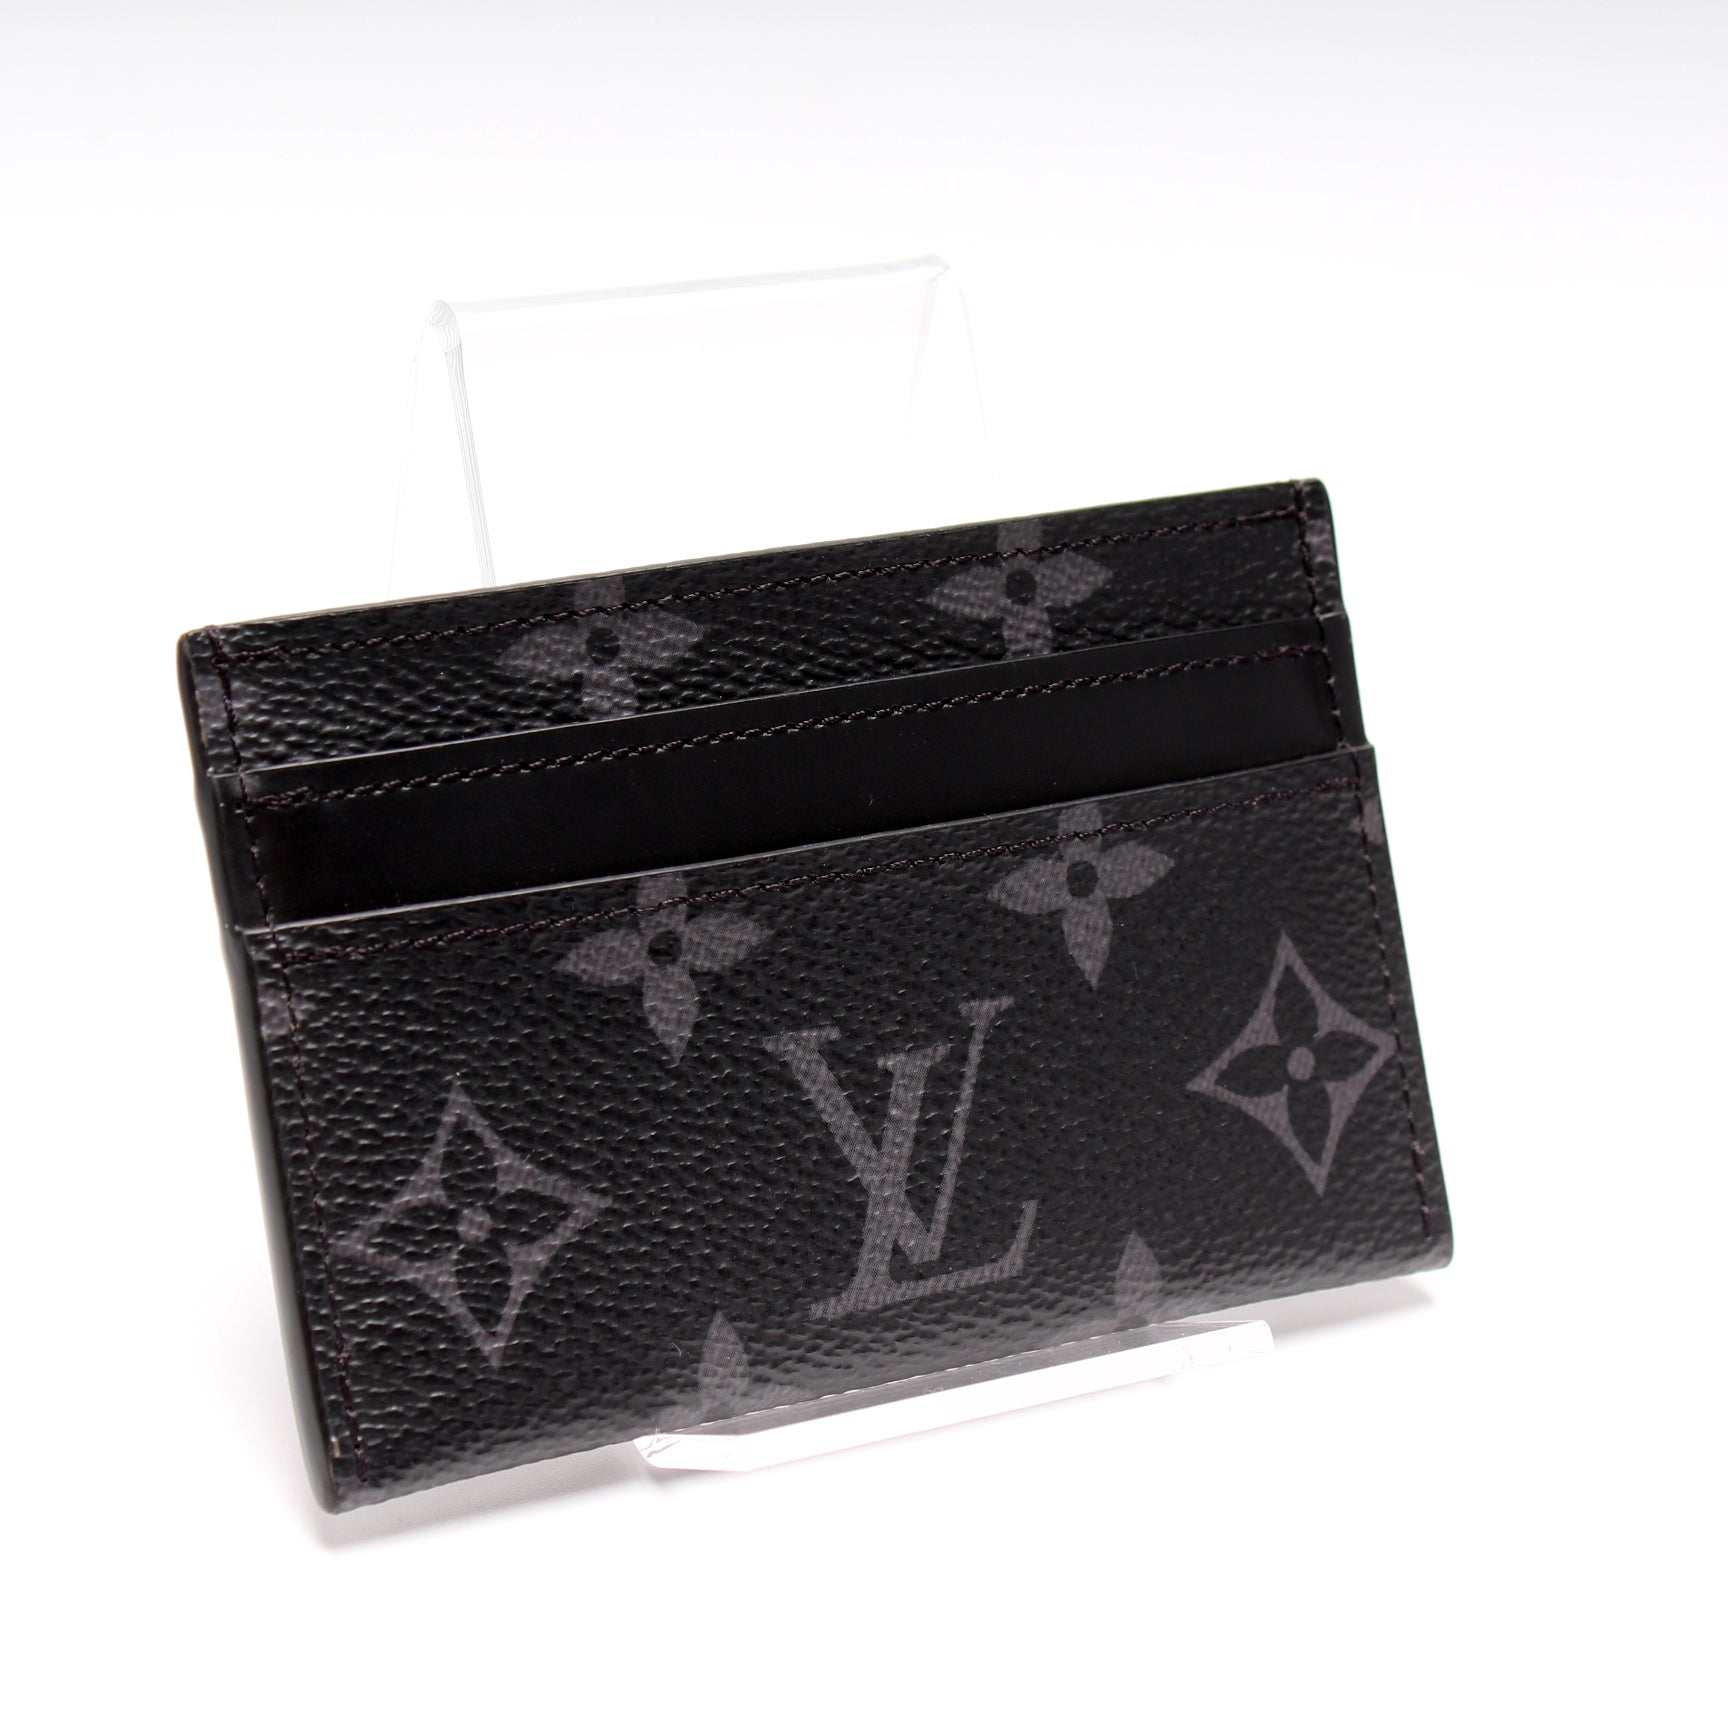 Double Card Holder Monogram Eclipse – Keeks Designer Handbags